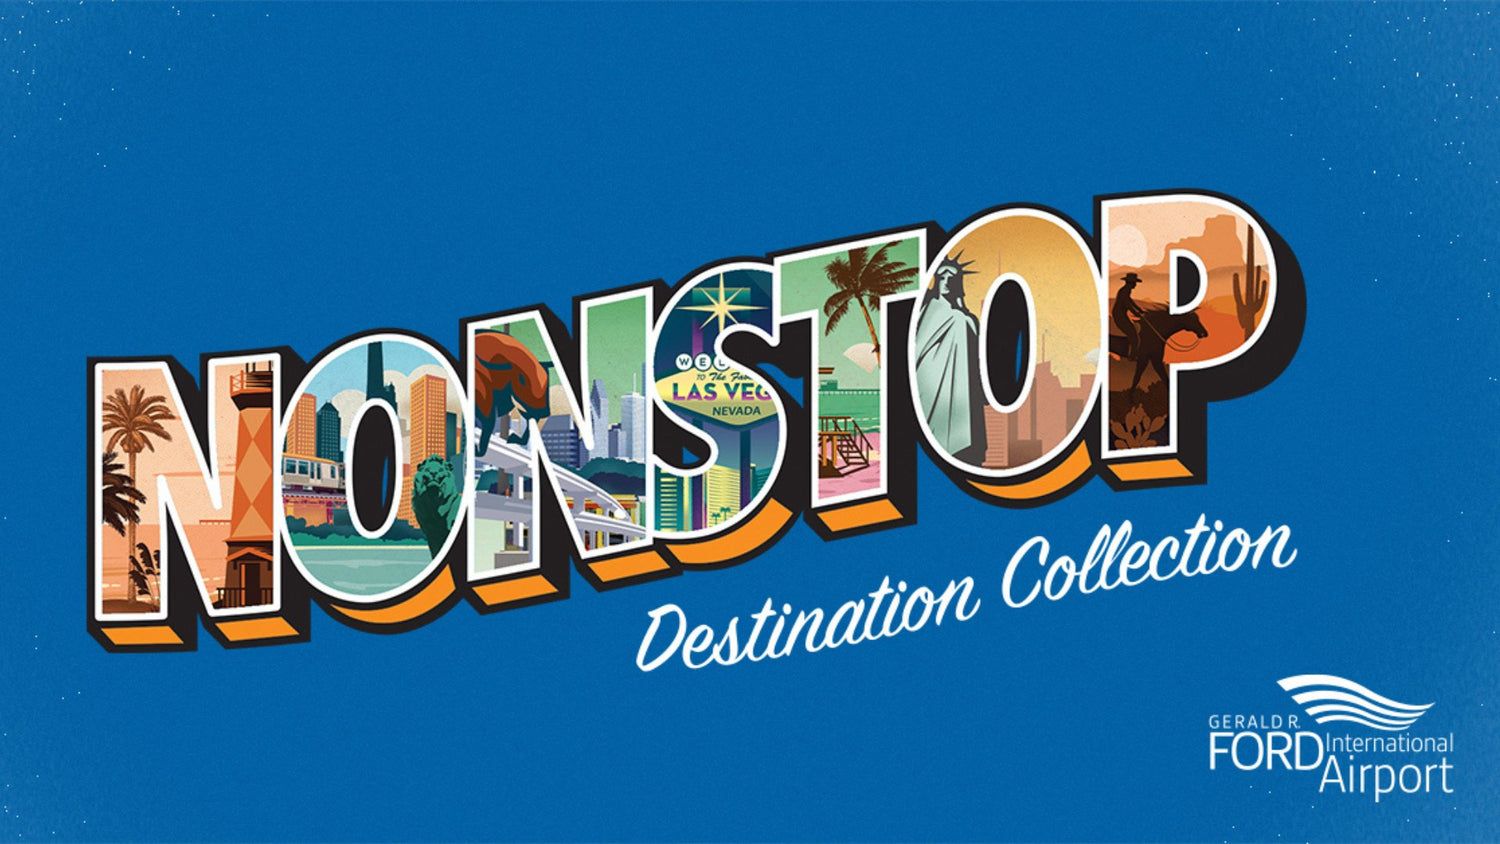 Destination Collection